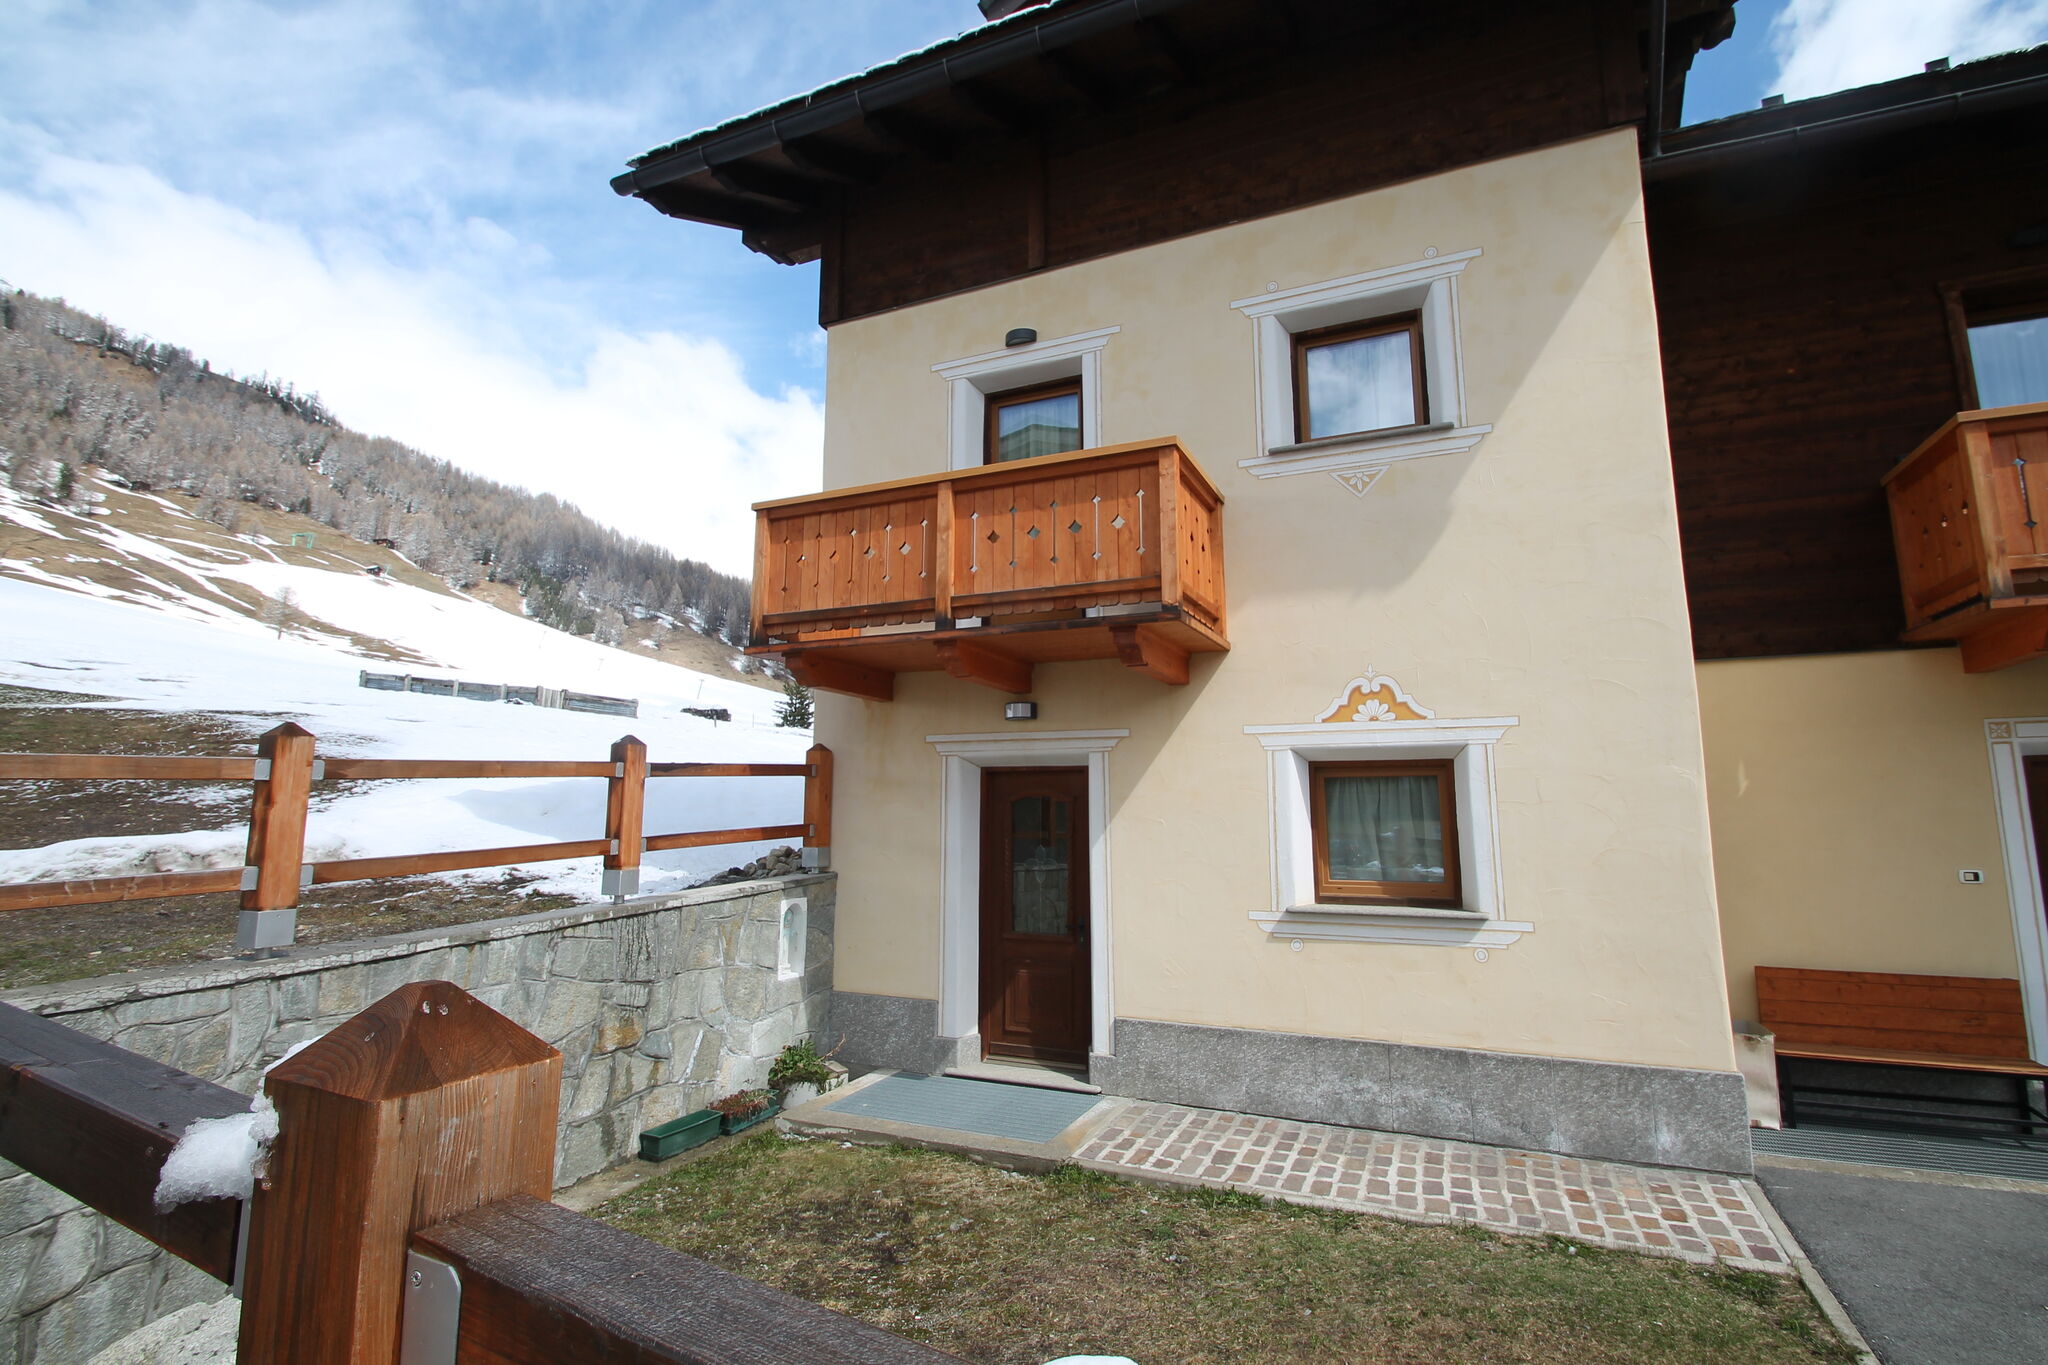 Atemberaubendes Ferienhaus in Livigno nahe dem Skilift